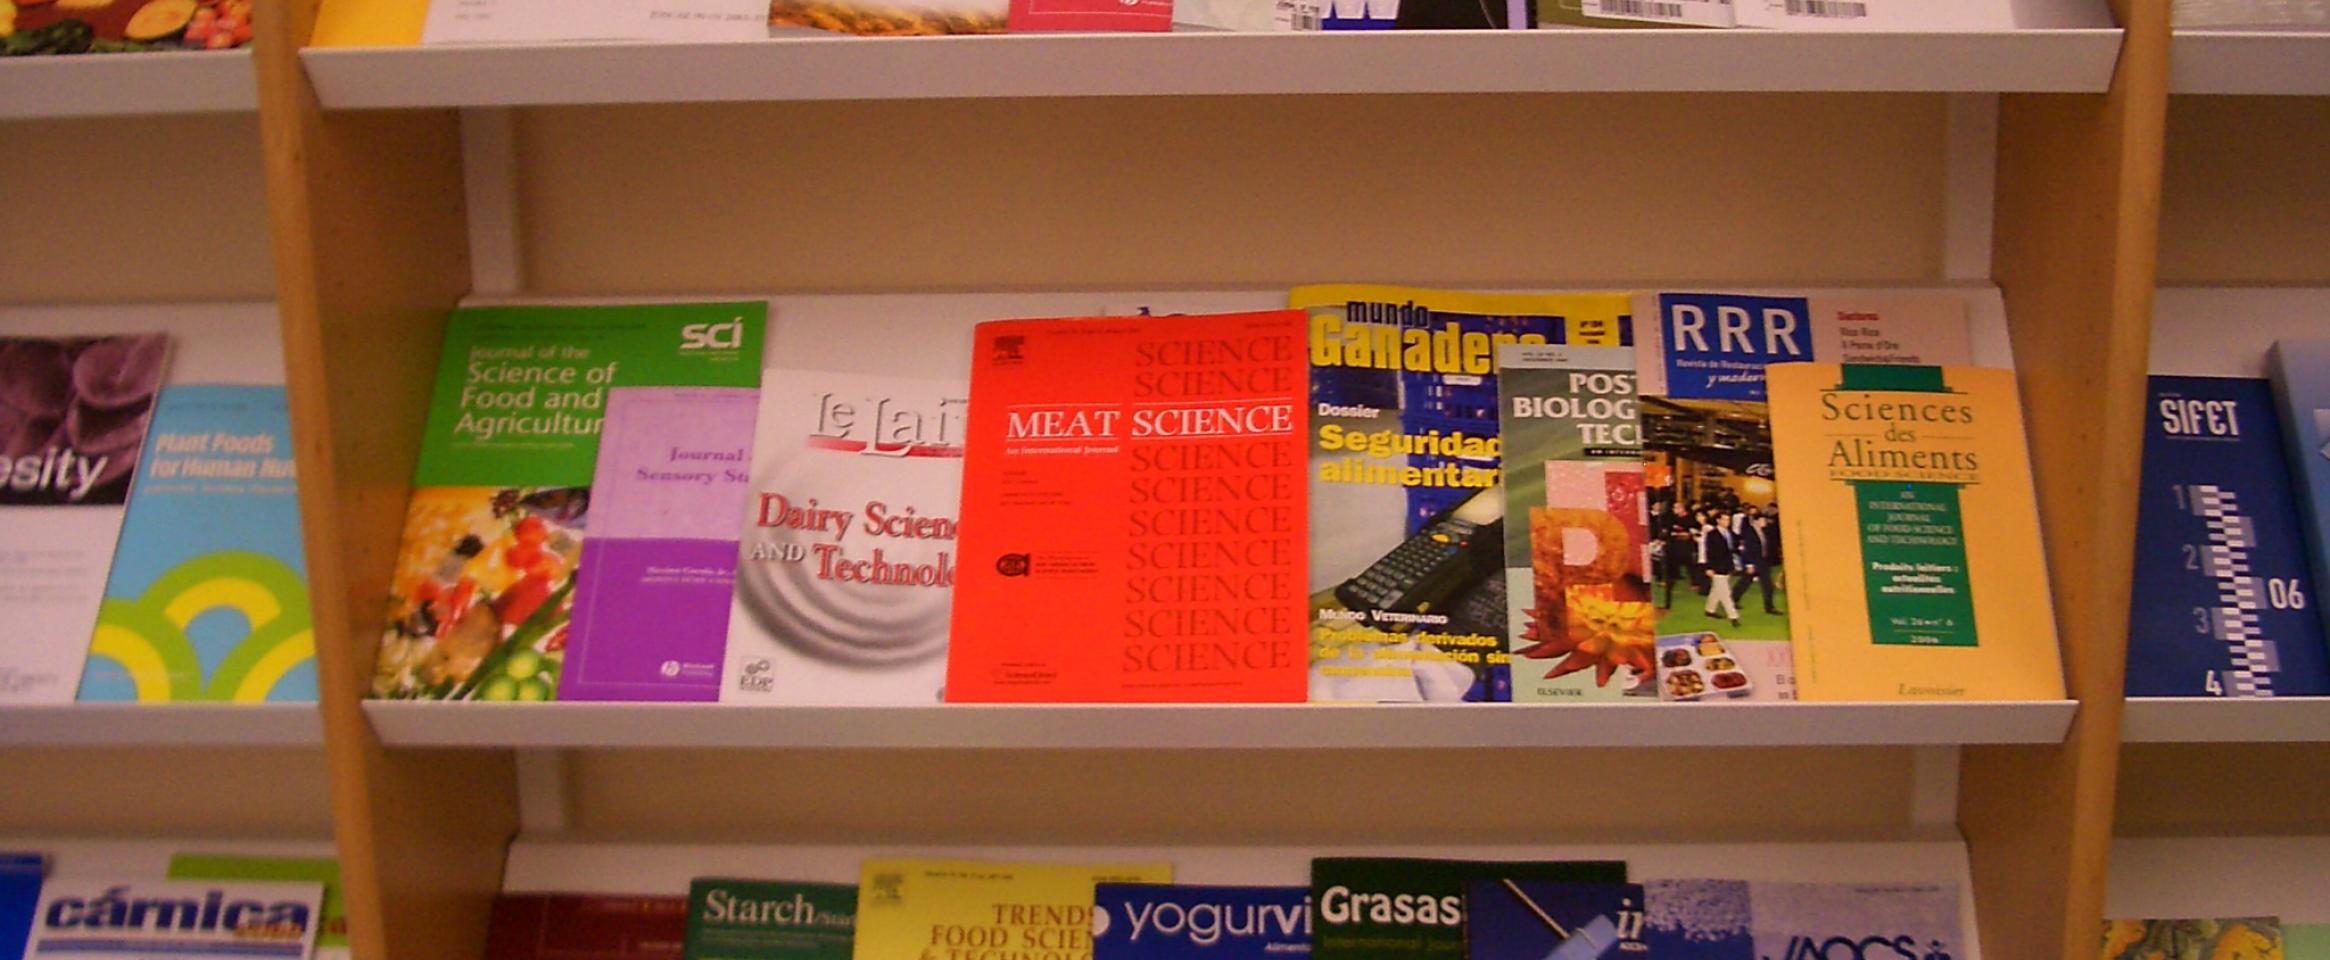 Science journals on bookshelf